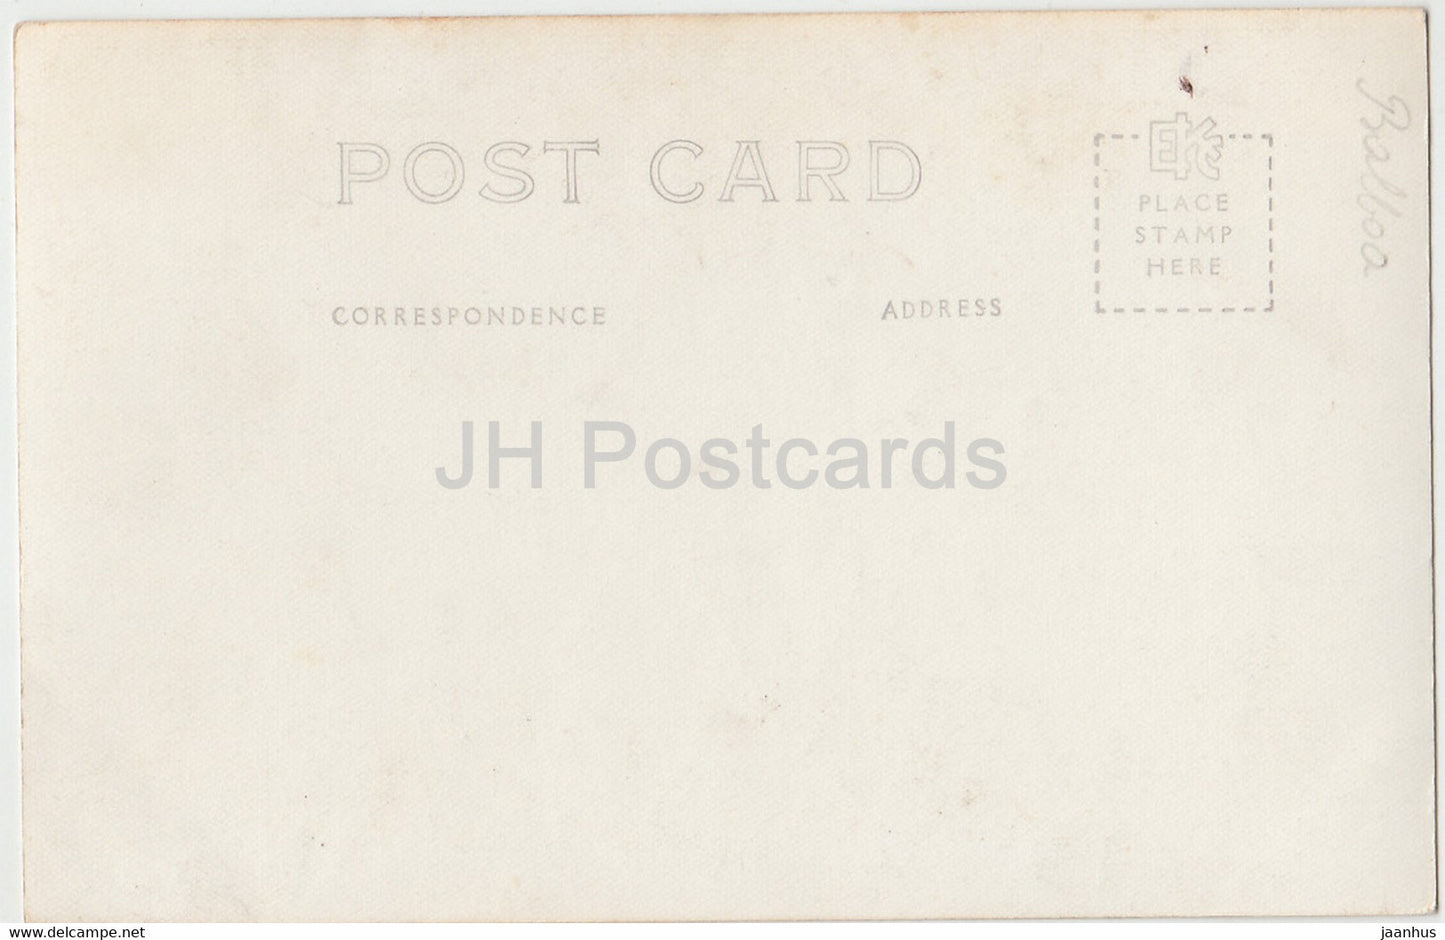 Palme des Reisenden - alte Postkarte - Panama - unbenutzt